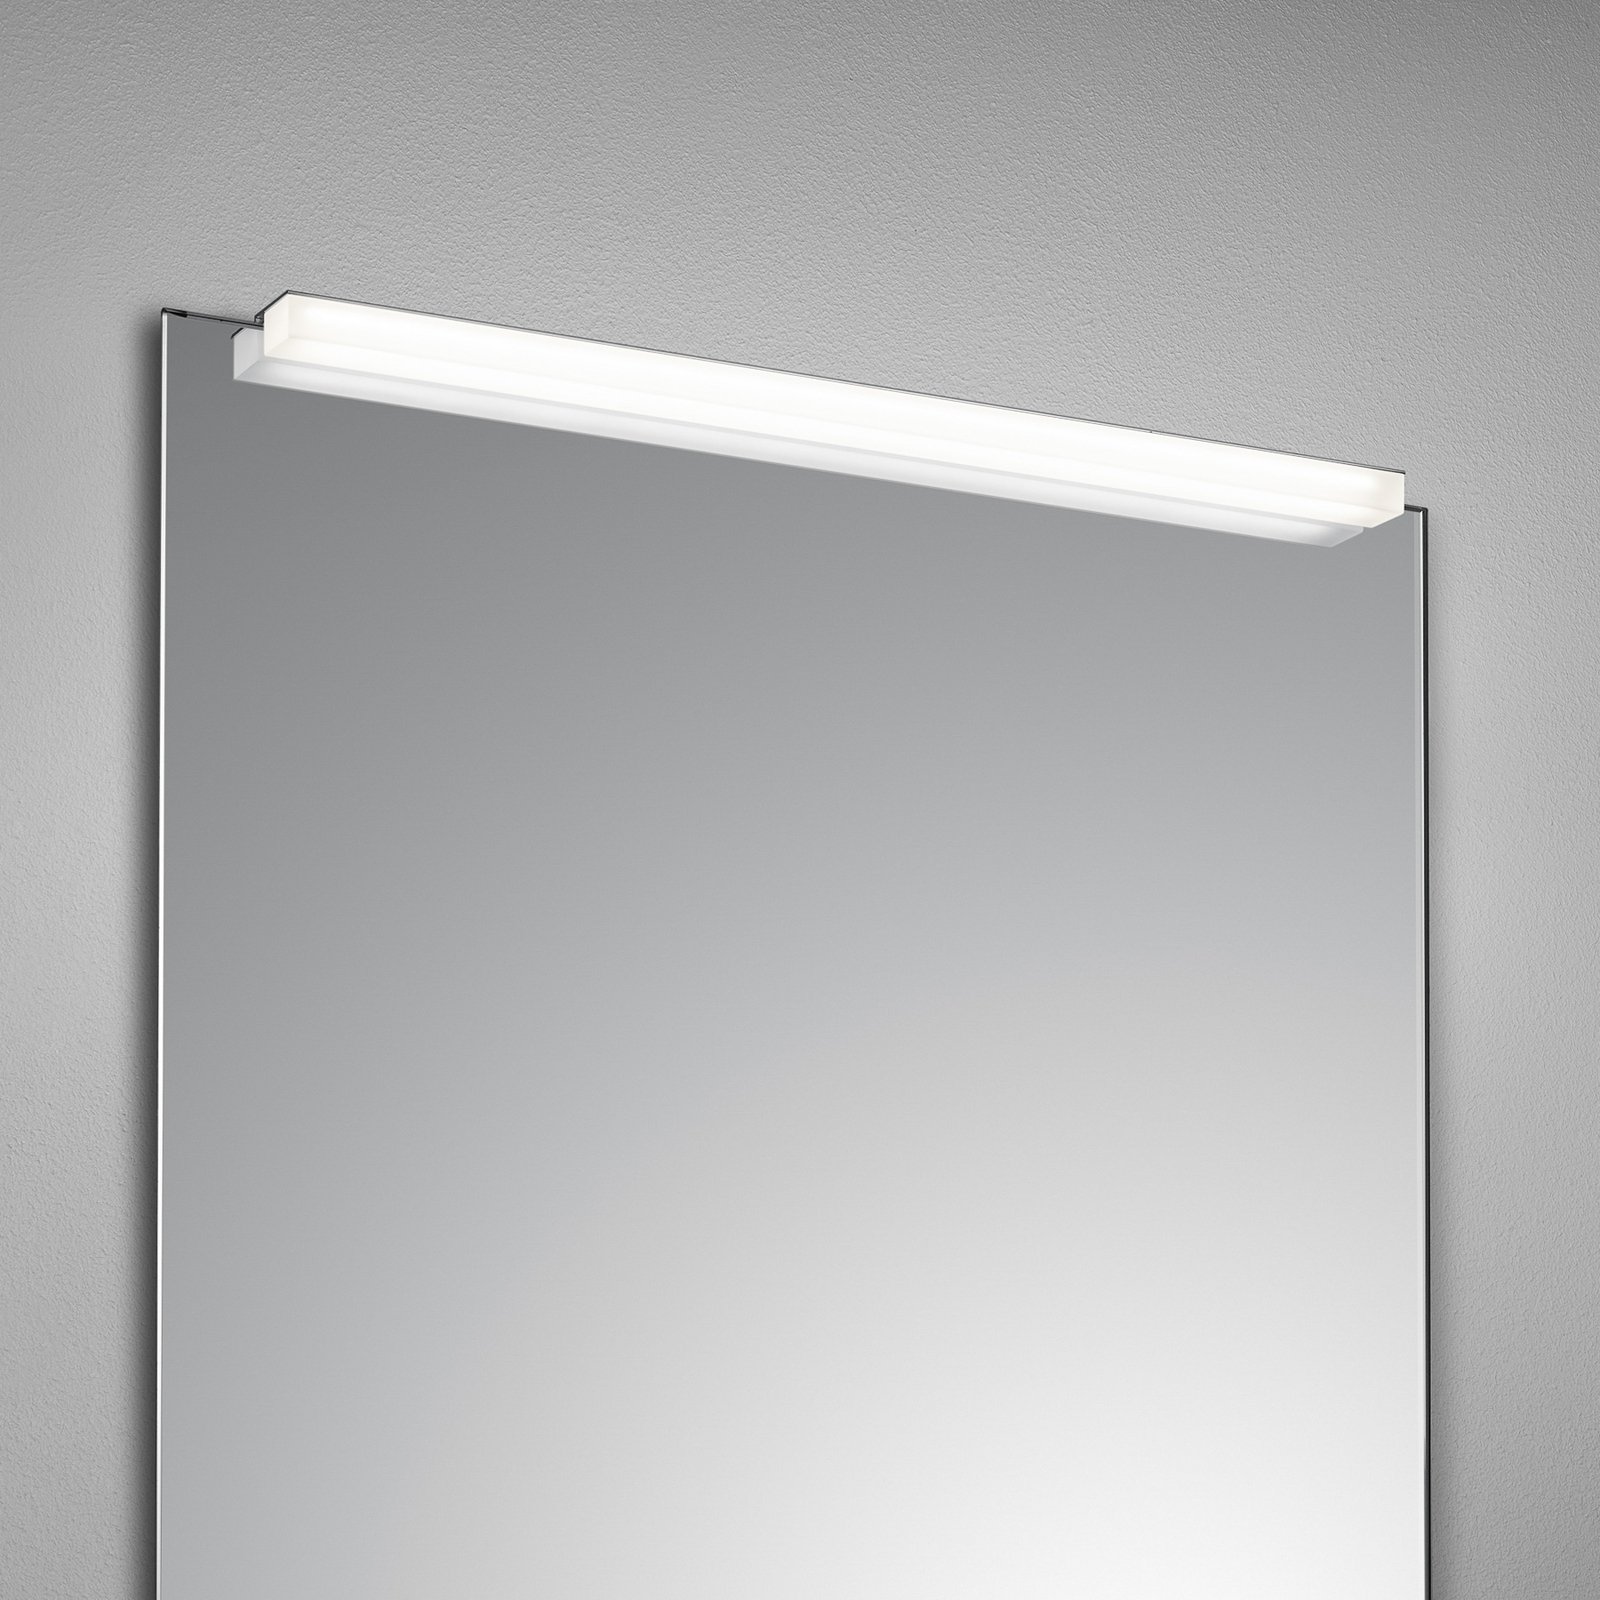 Helestra Onta applique pour miroir LED, 60 cm